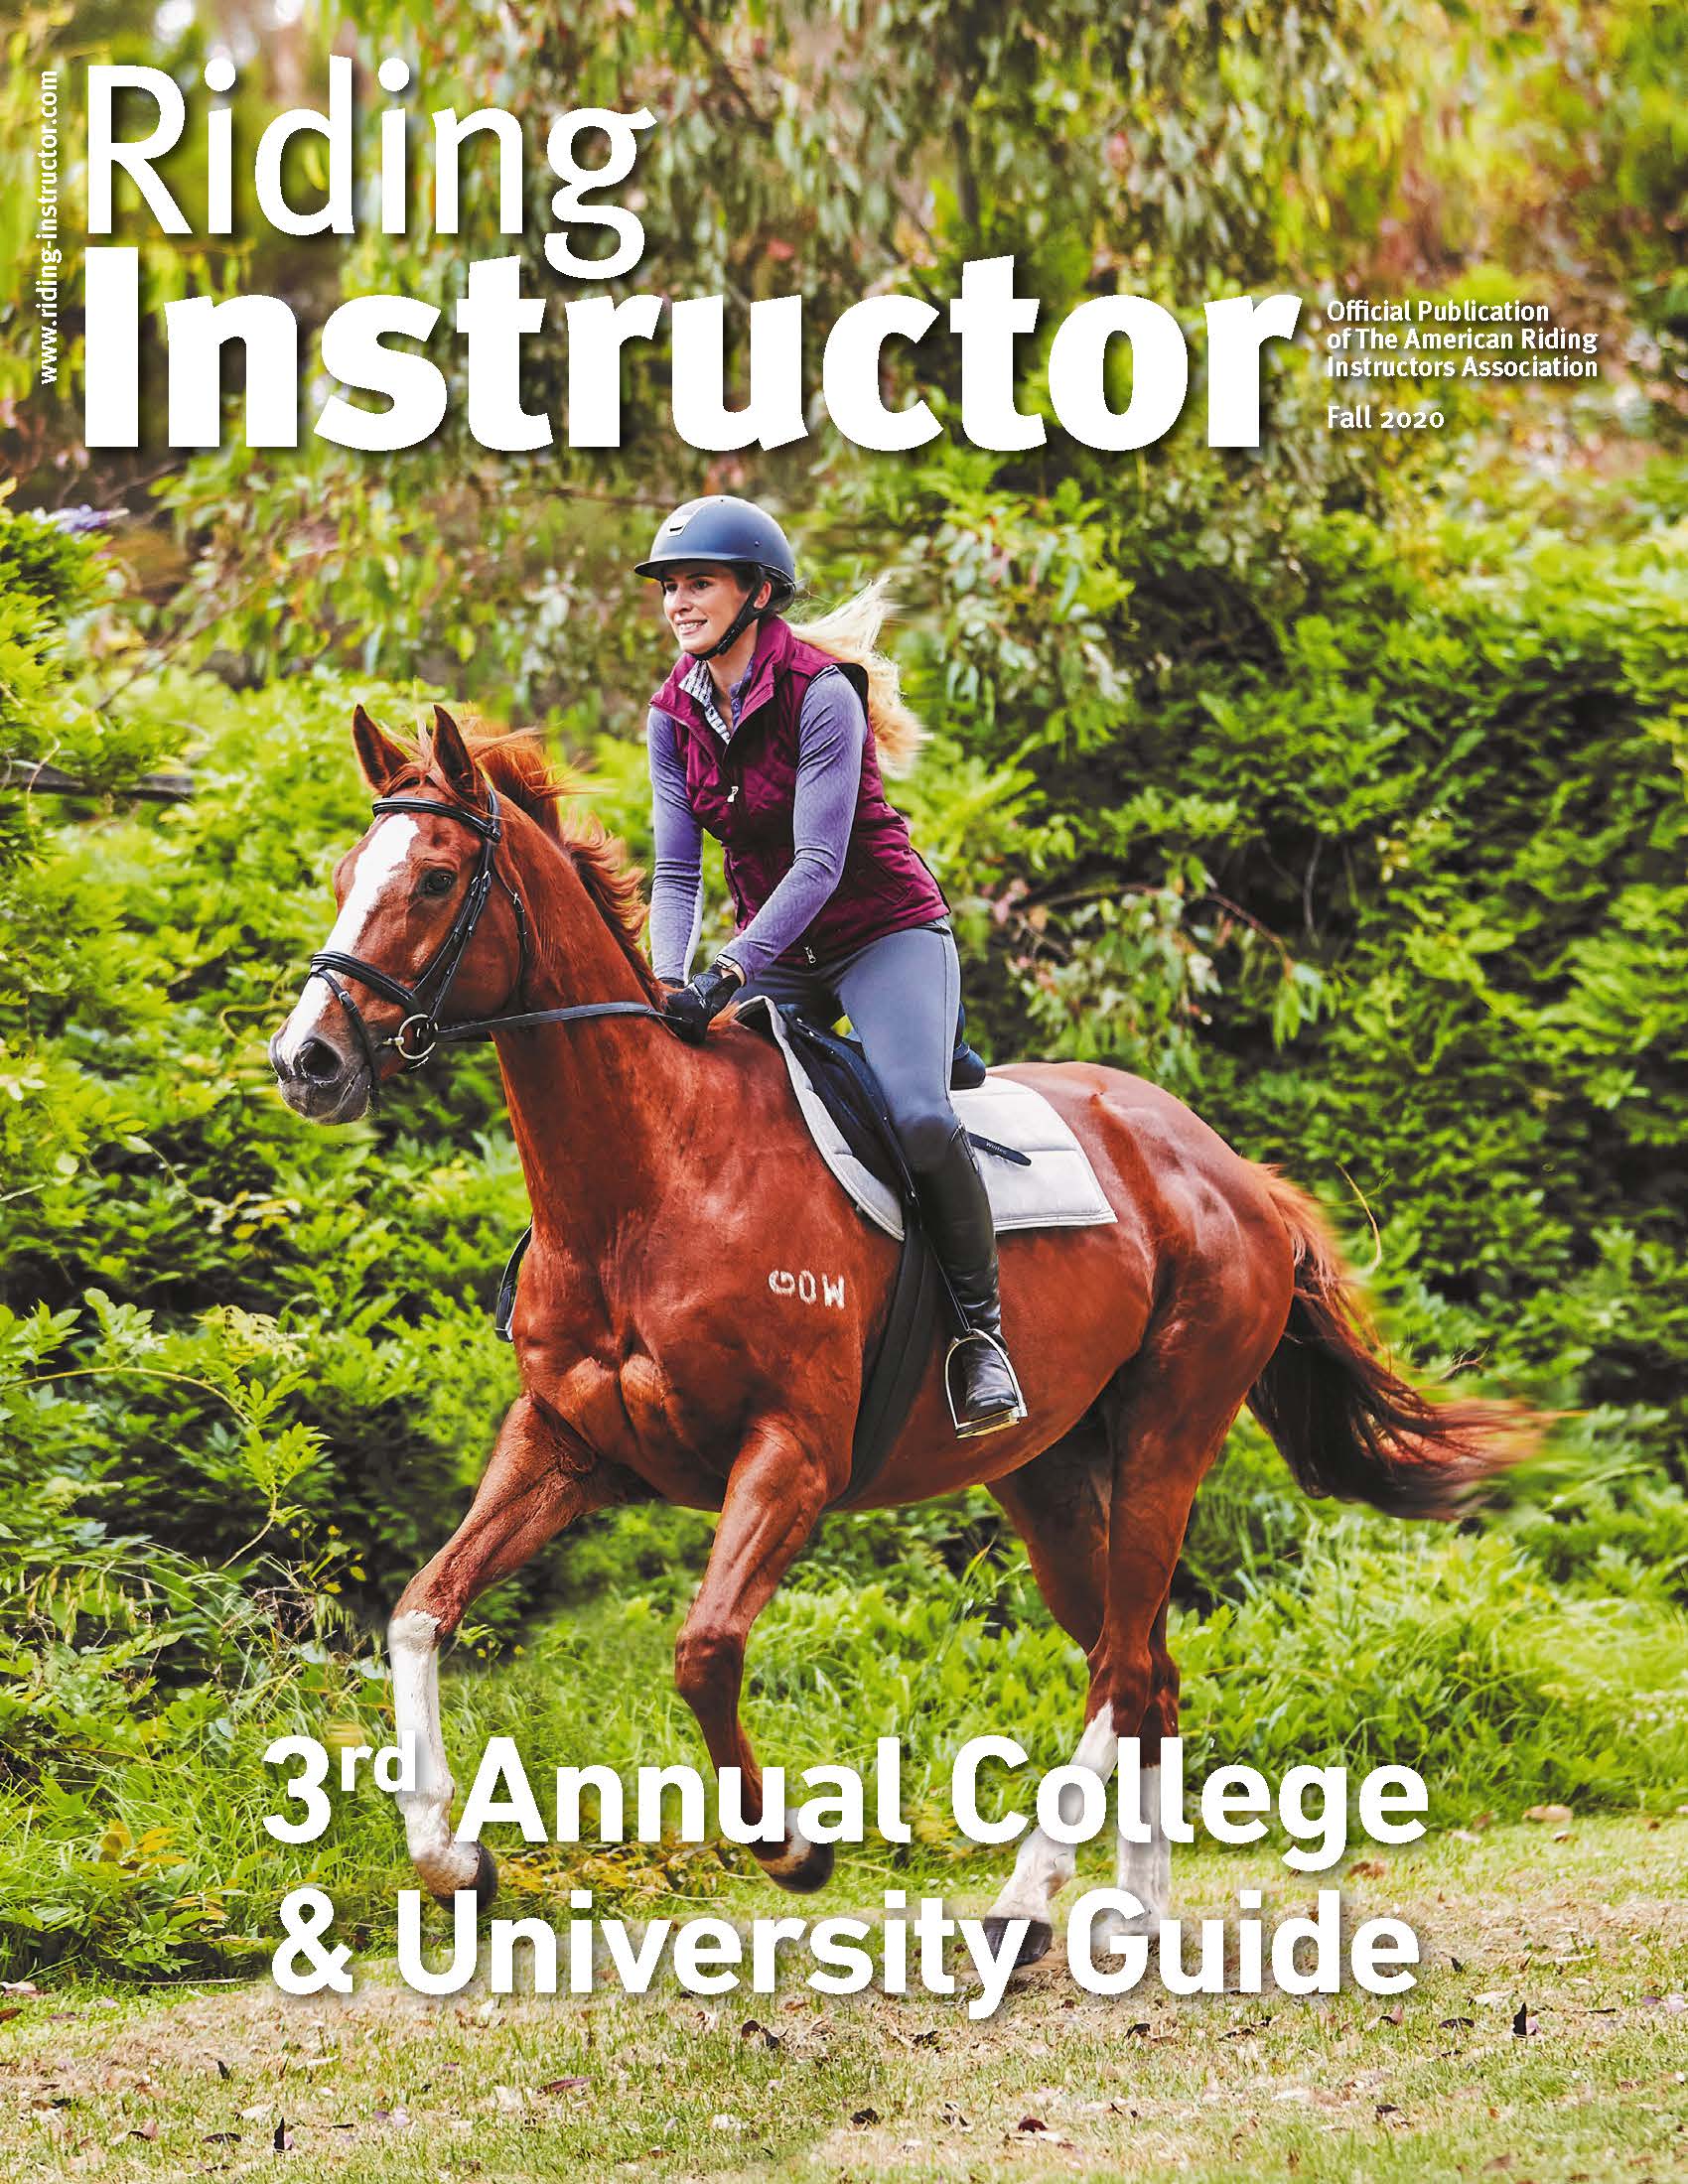 Riding Instructor Magazine Fall 2020